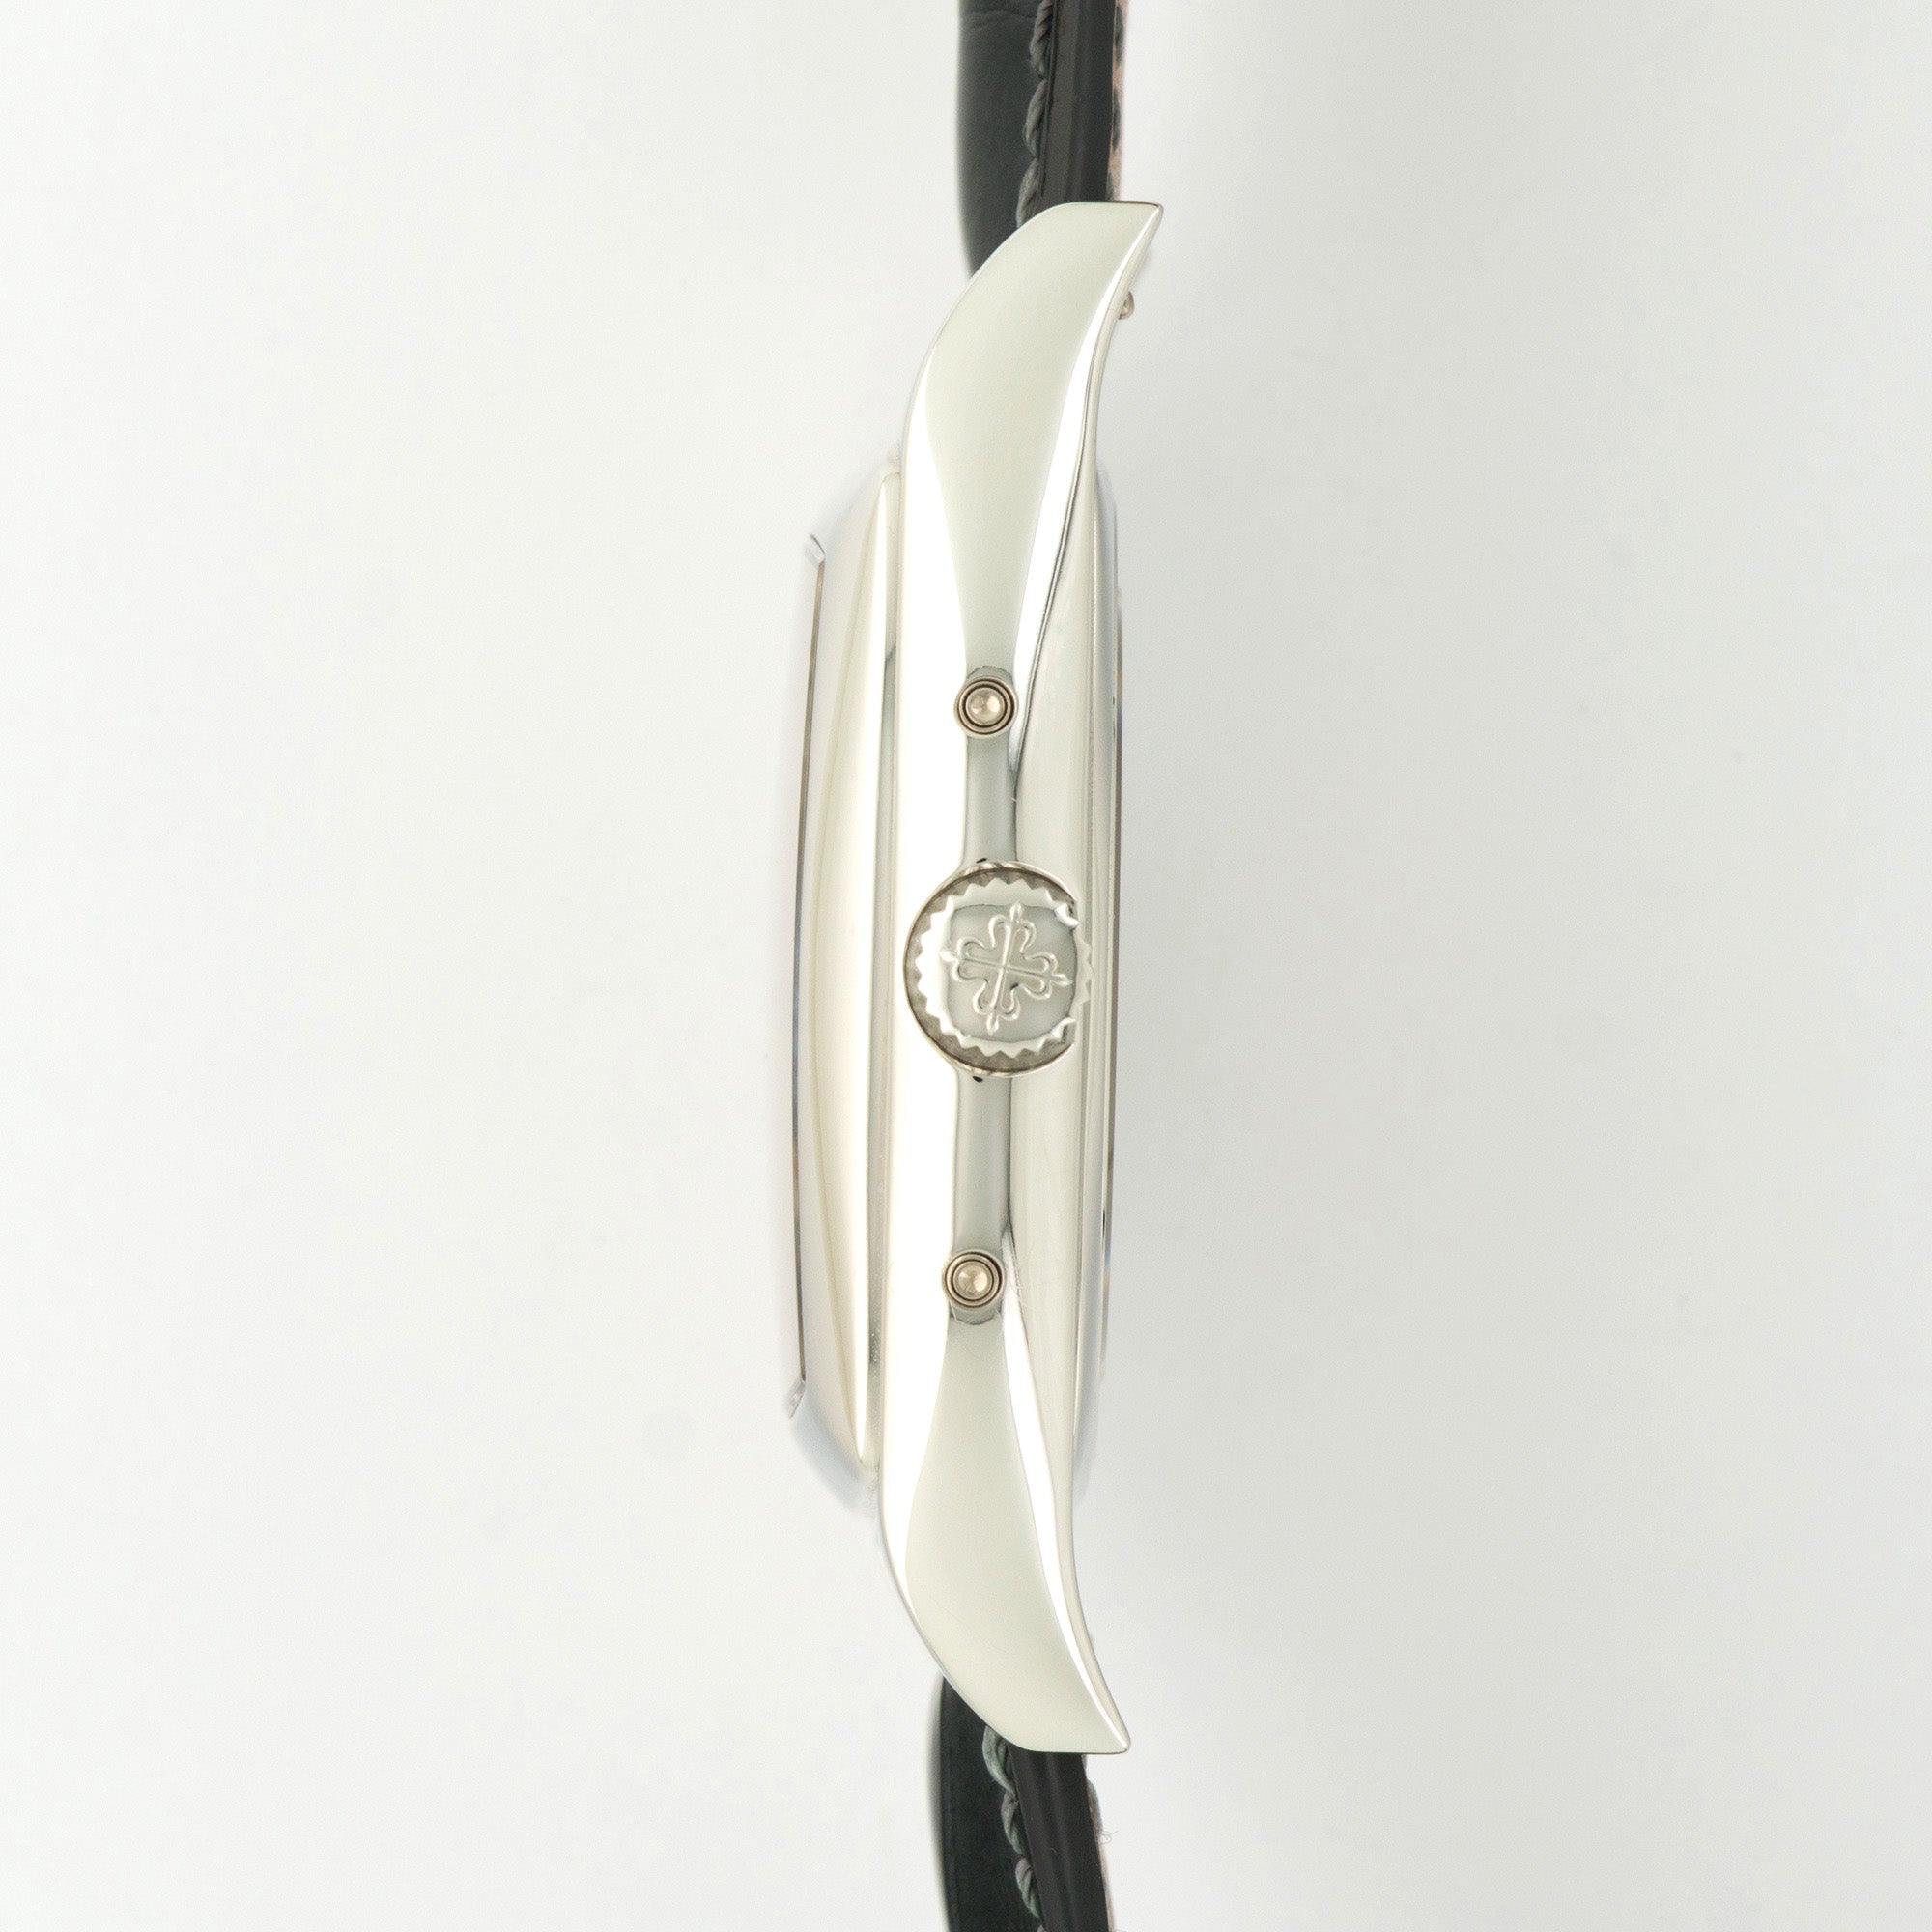 Patek Philippe - Patek Philippe Platinum Gondolo Tiffany & Co. Ref. 5135 - The Keystone Watches